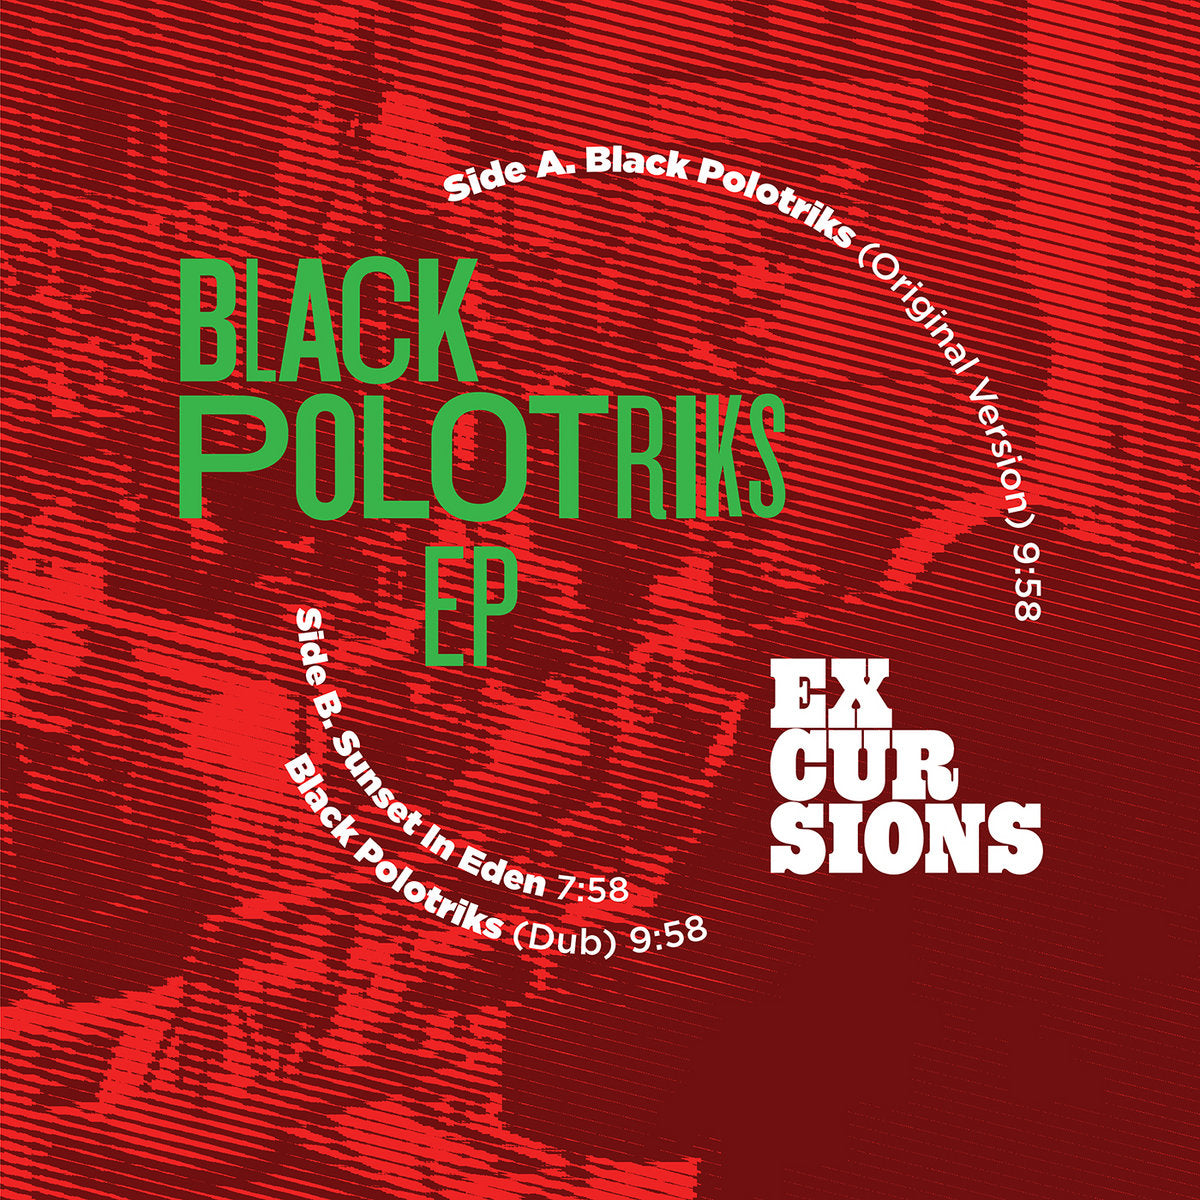 Black Polotriks EP (New 12")